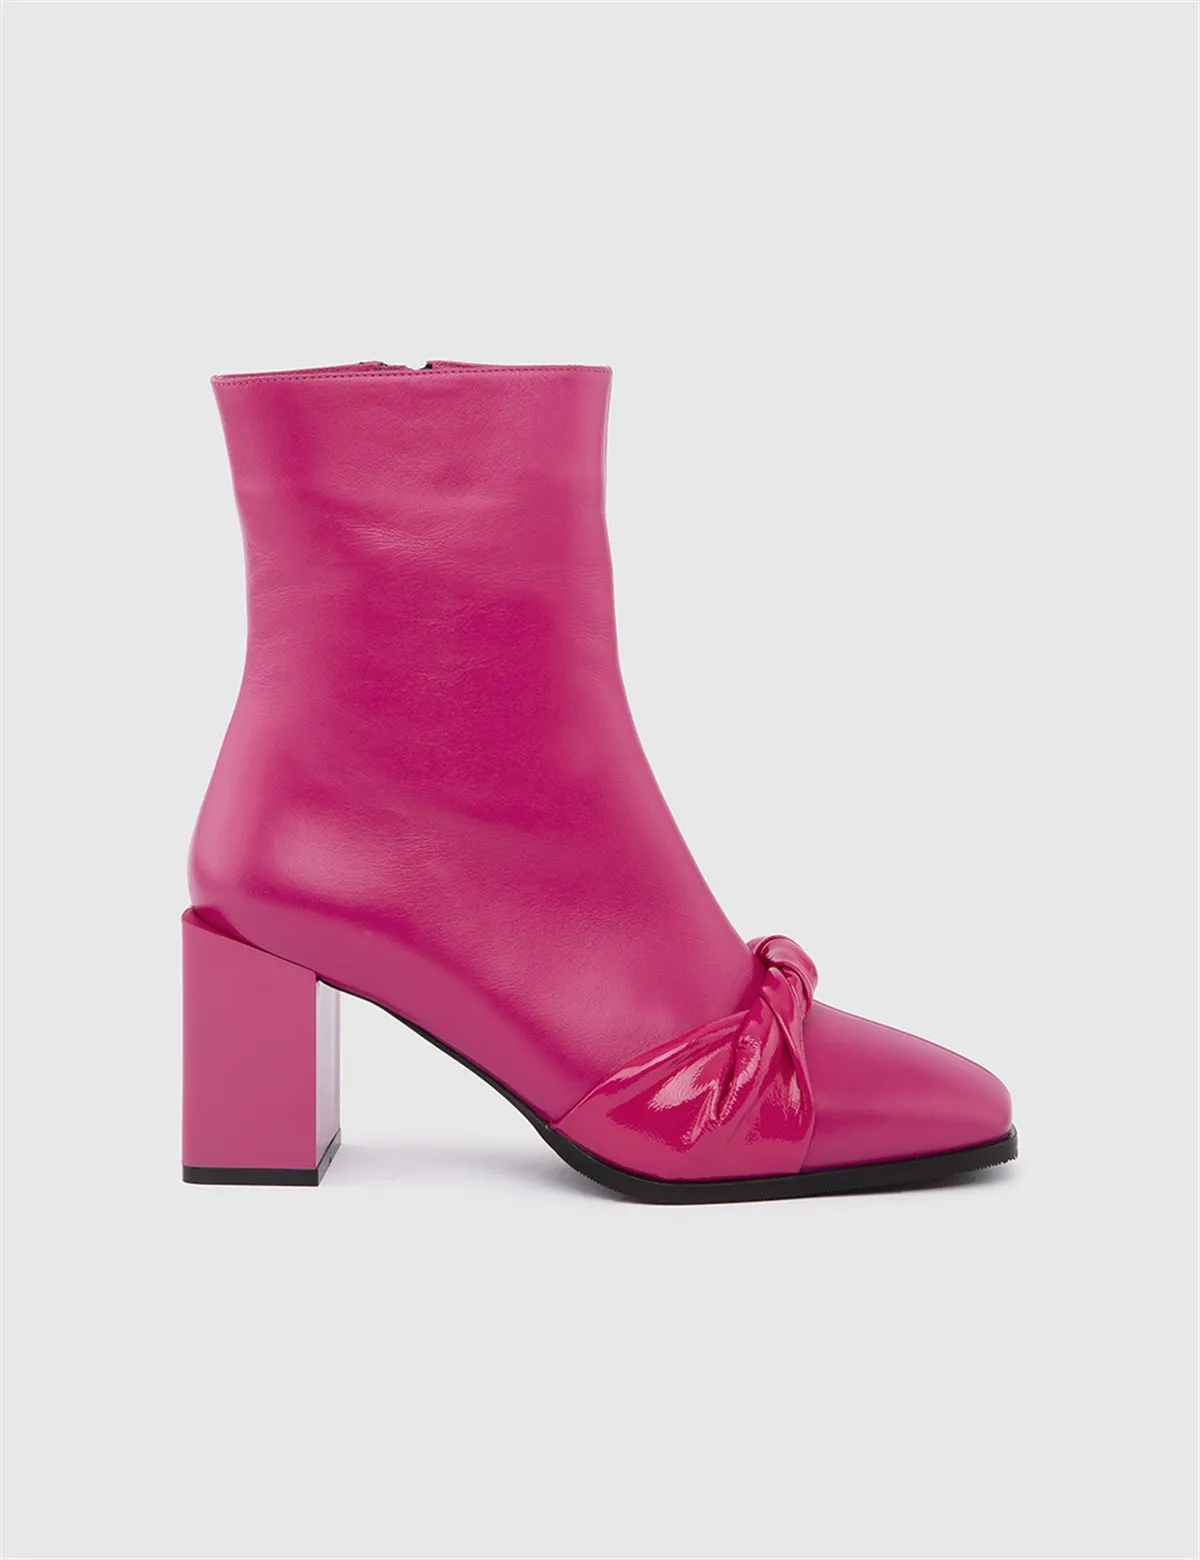 

ILVi-Genuine Leather Handmade Garcia Fuchsia Patent Leather Women's Heeled Boot Women's Shoes 2022 Fall/Winter